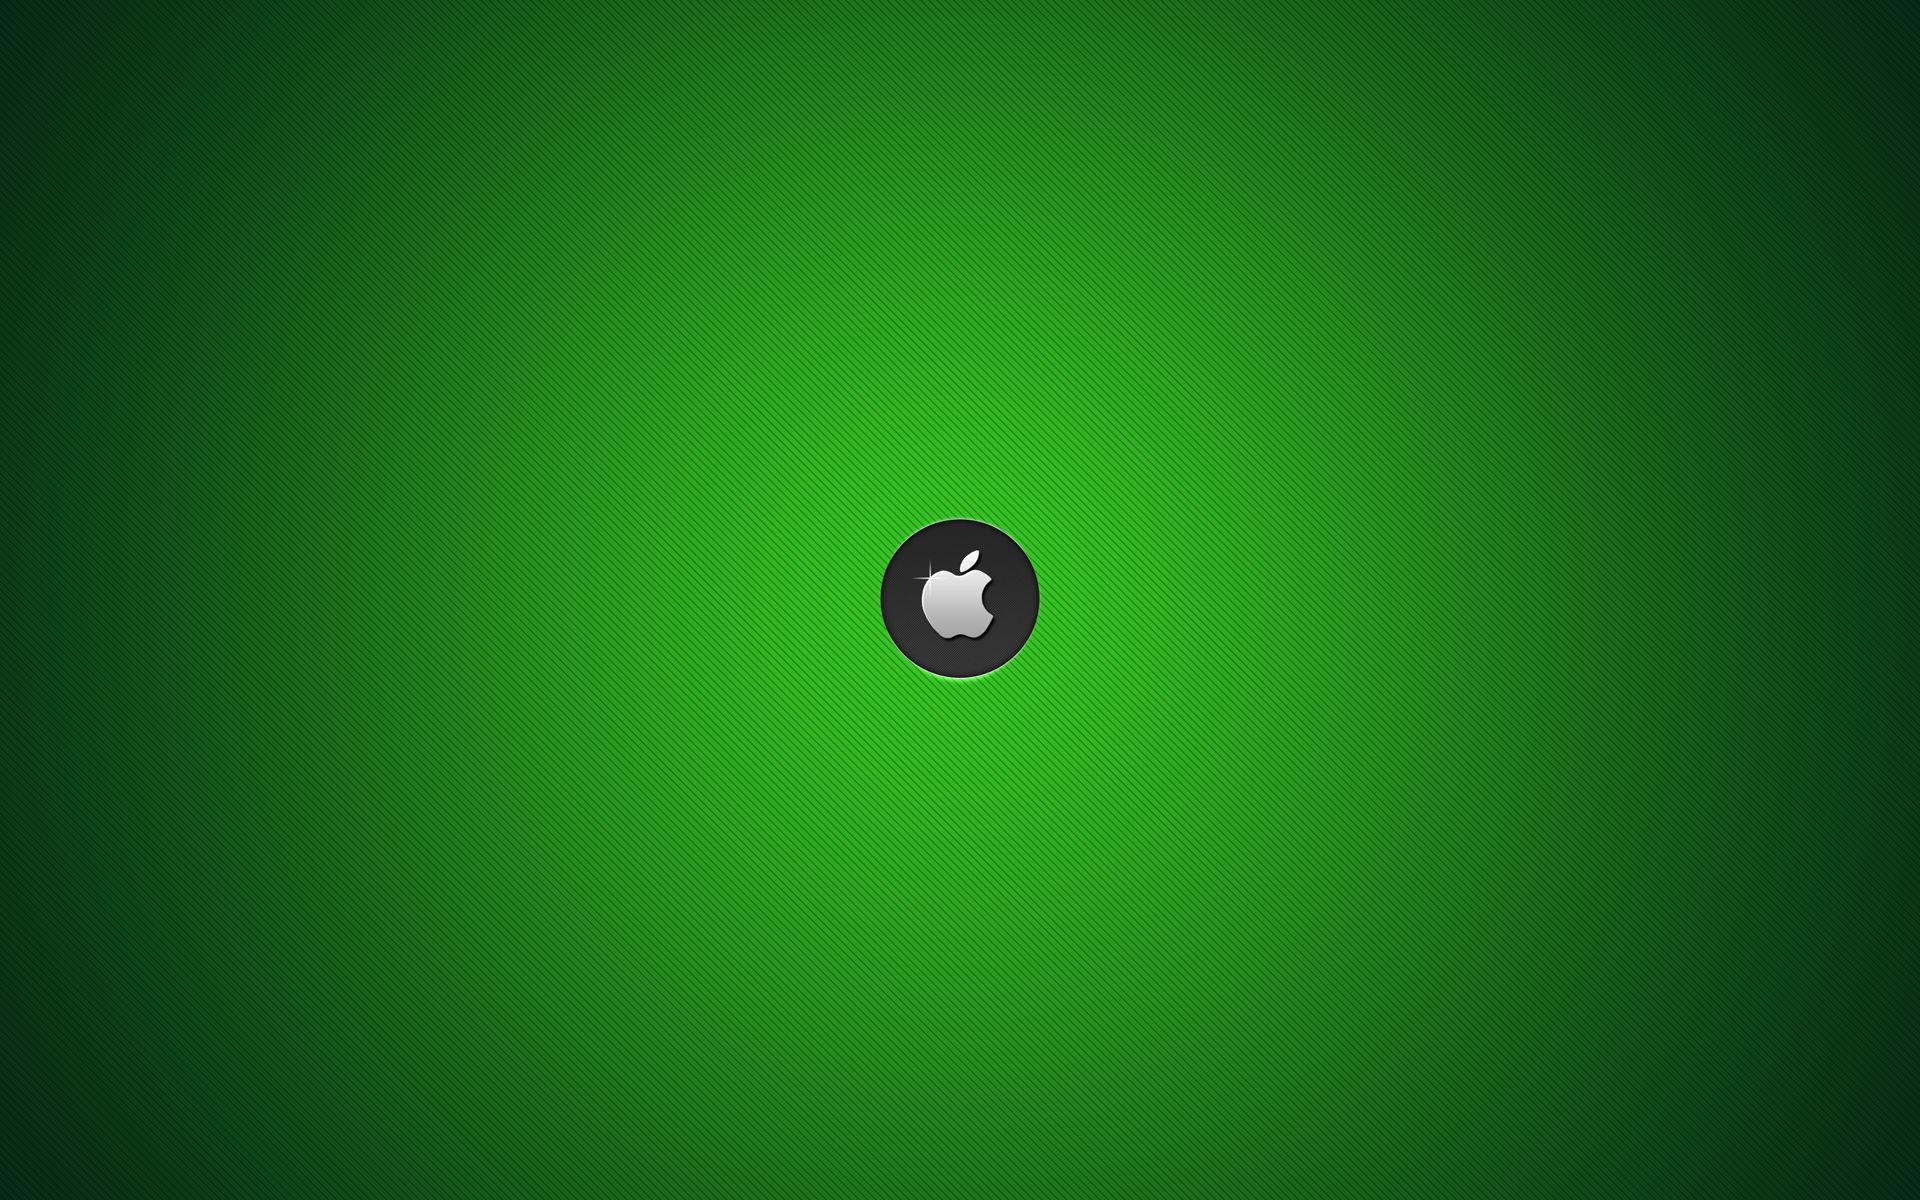 Green Apple wallpaper. Green Apple